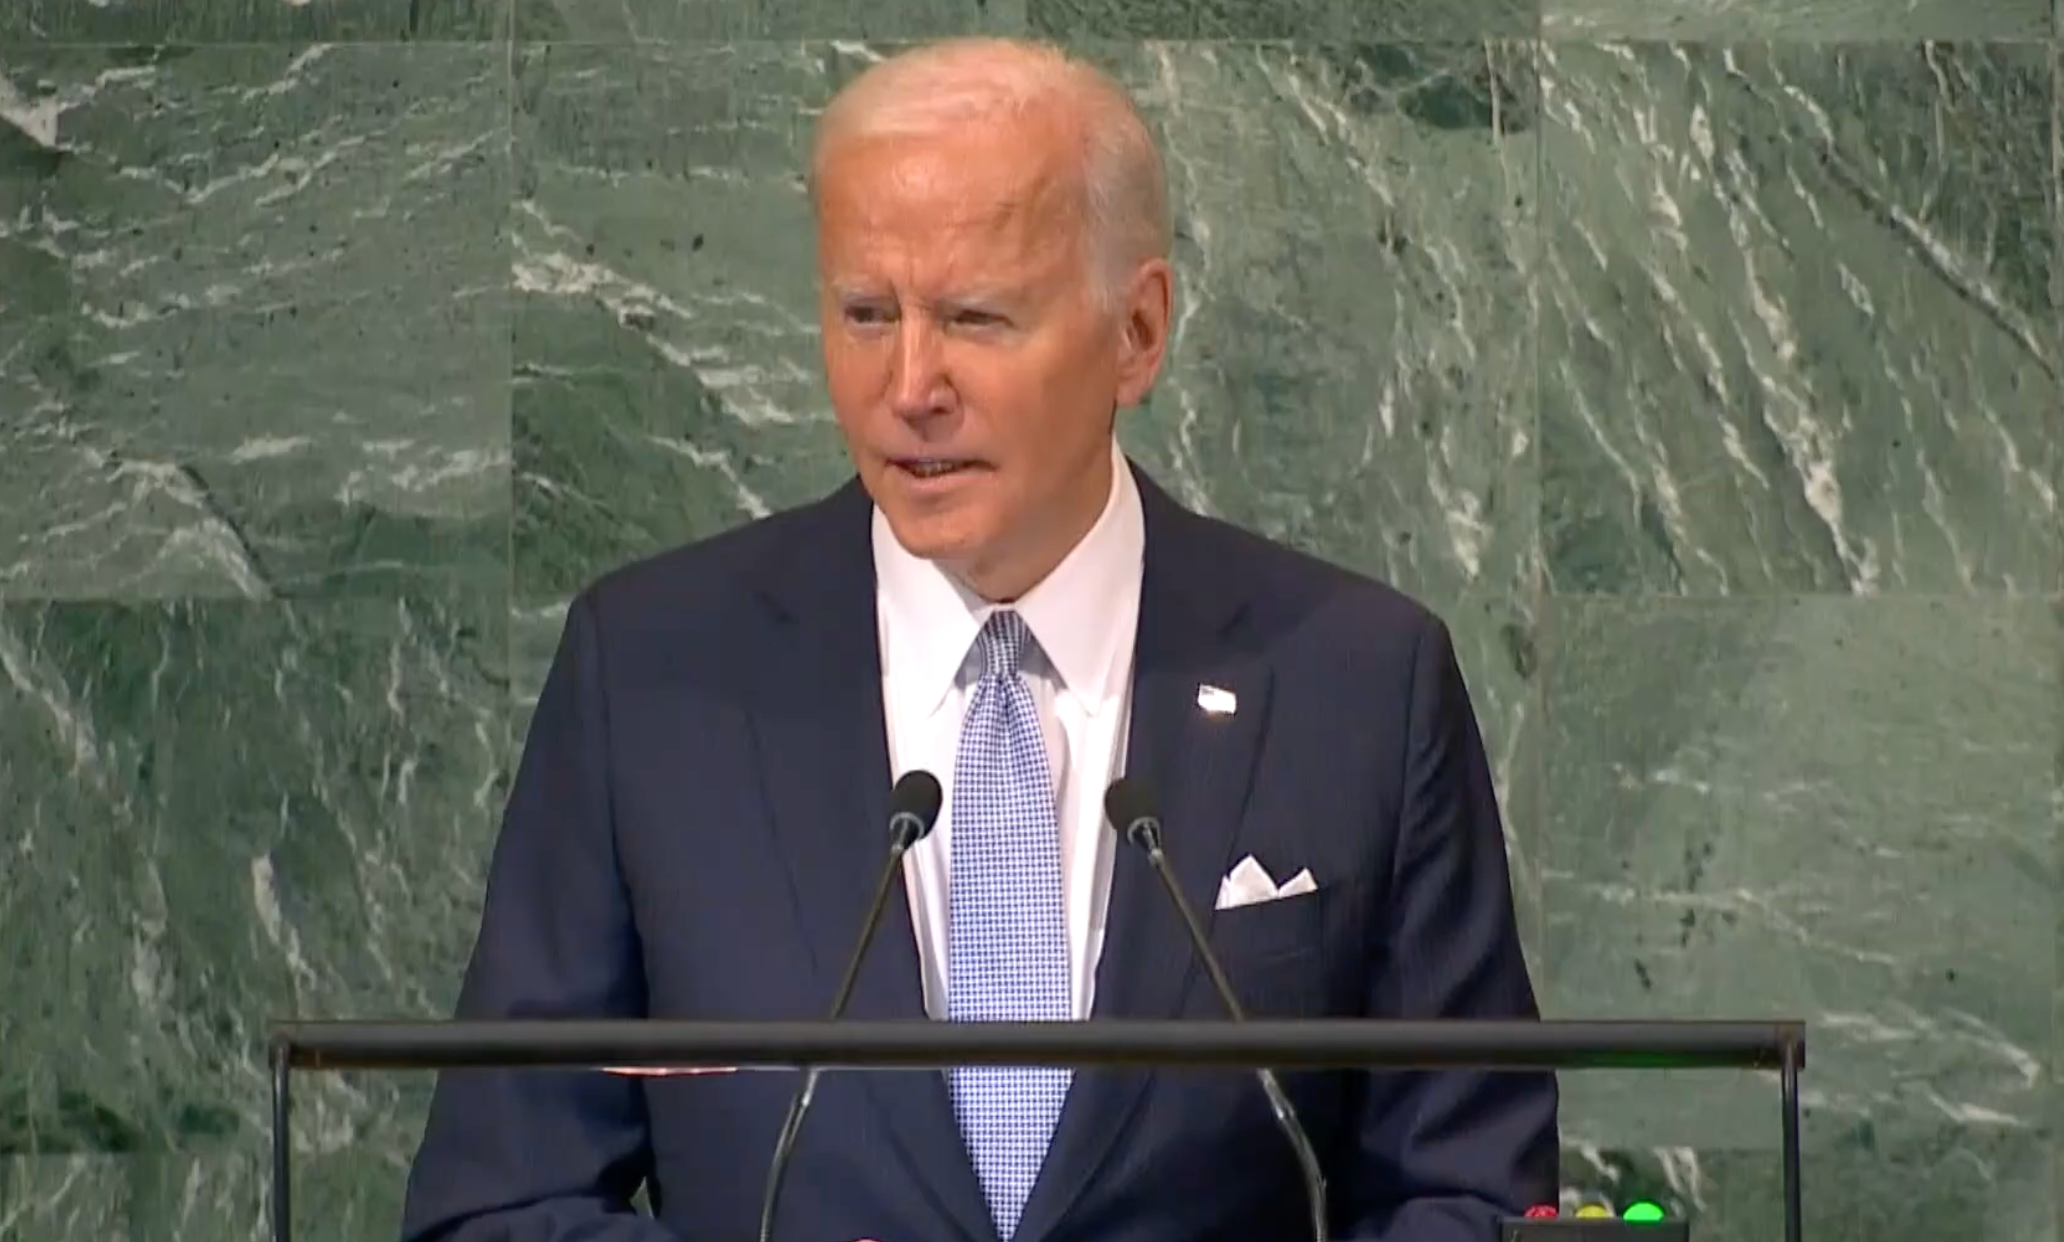 Joe Biden speaks at the UN general assembly